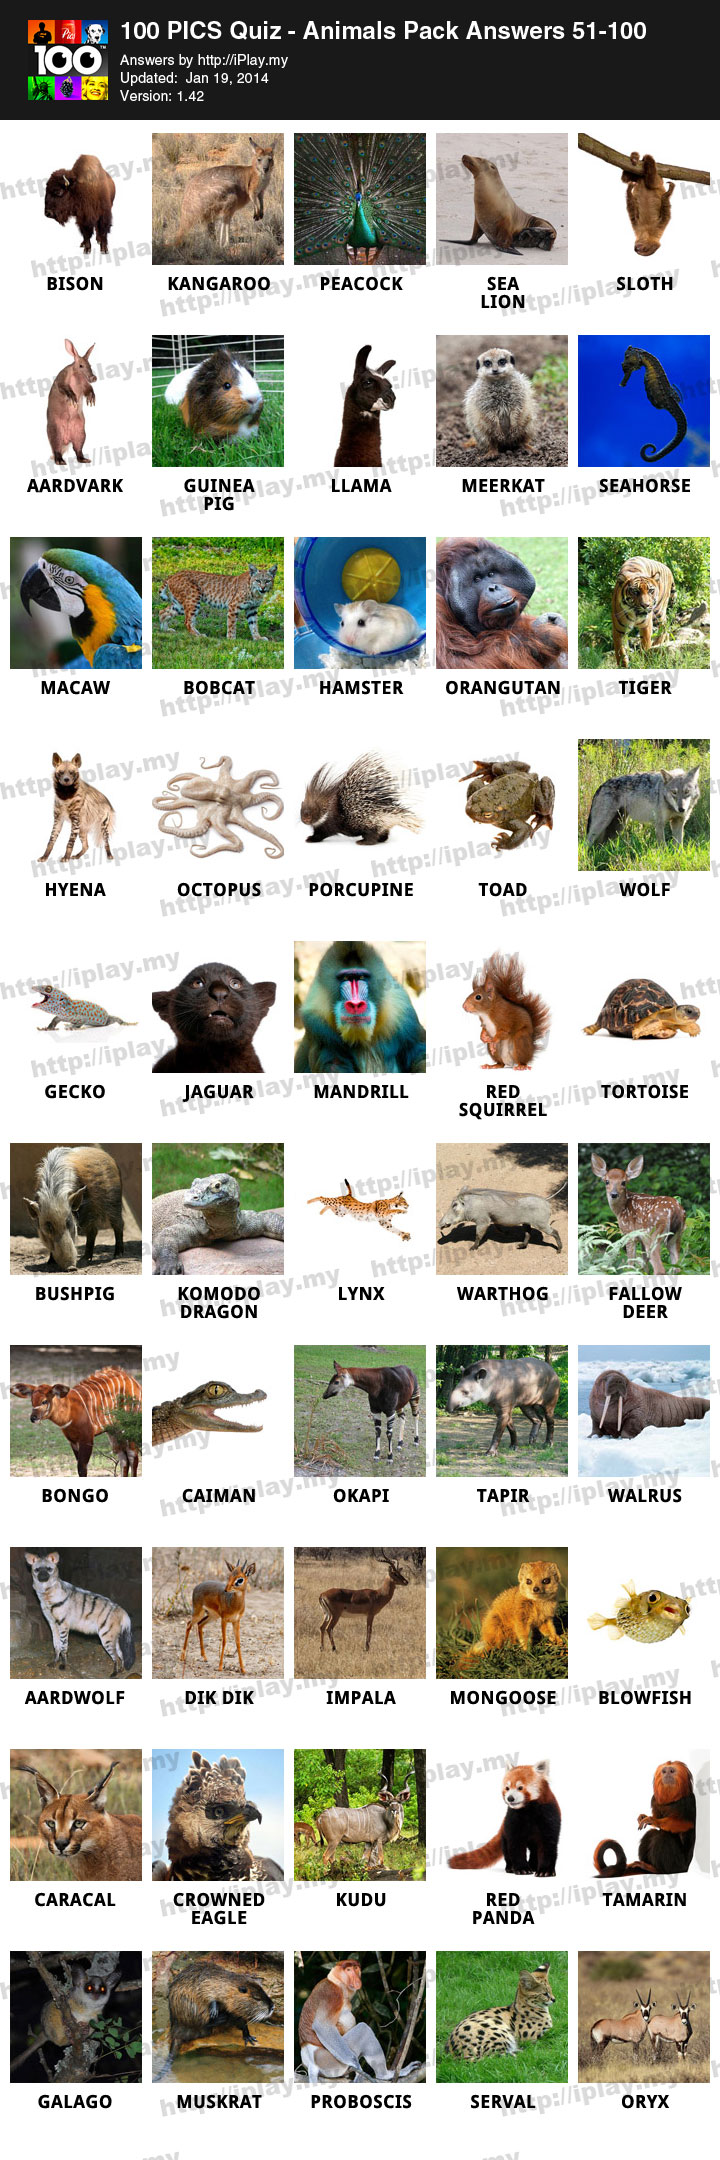 100-Pics-Quiz-Animals-Pack-Answers-51-100